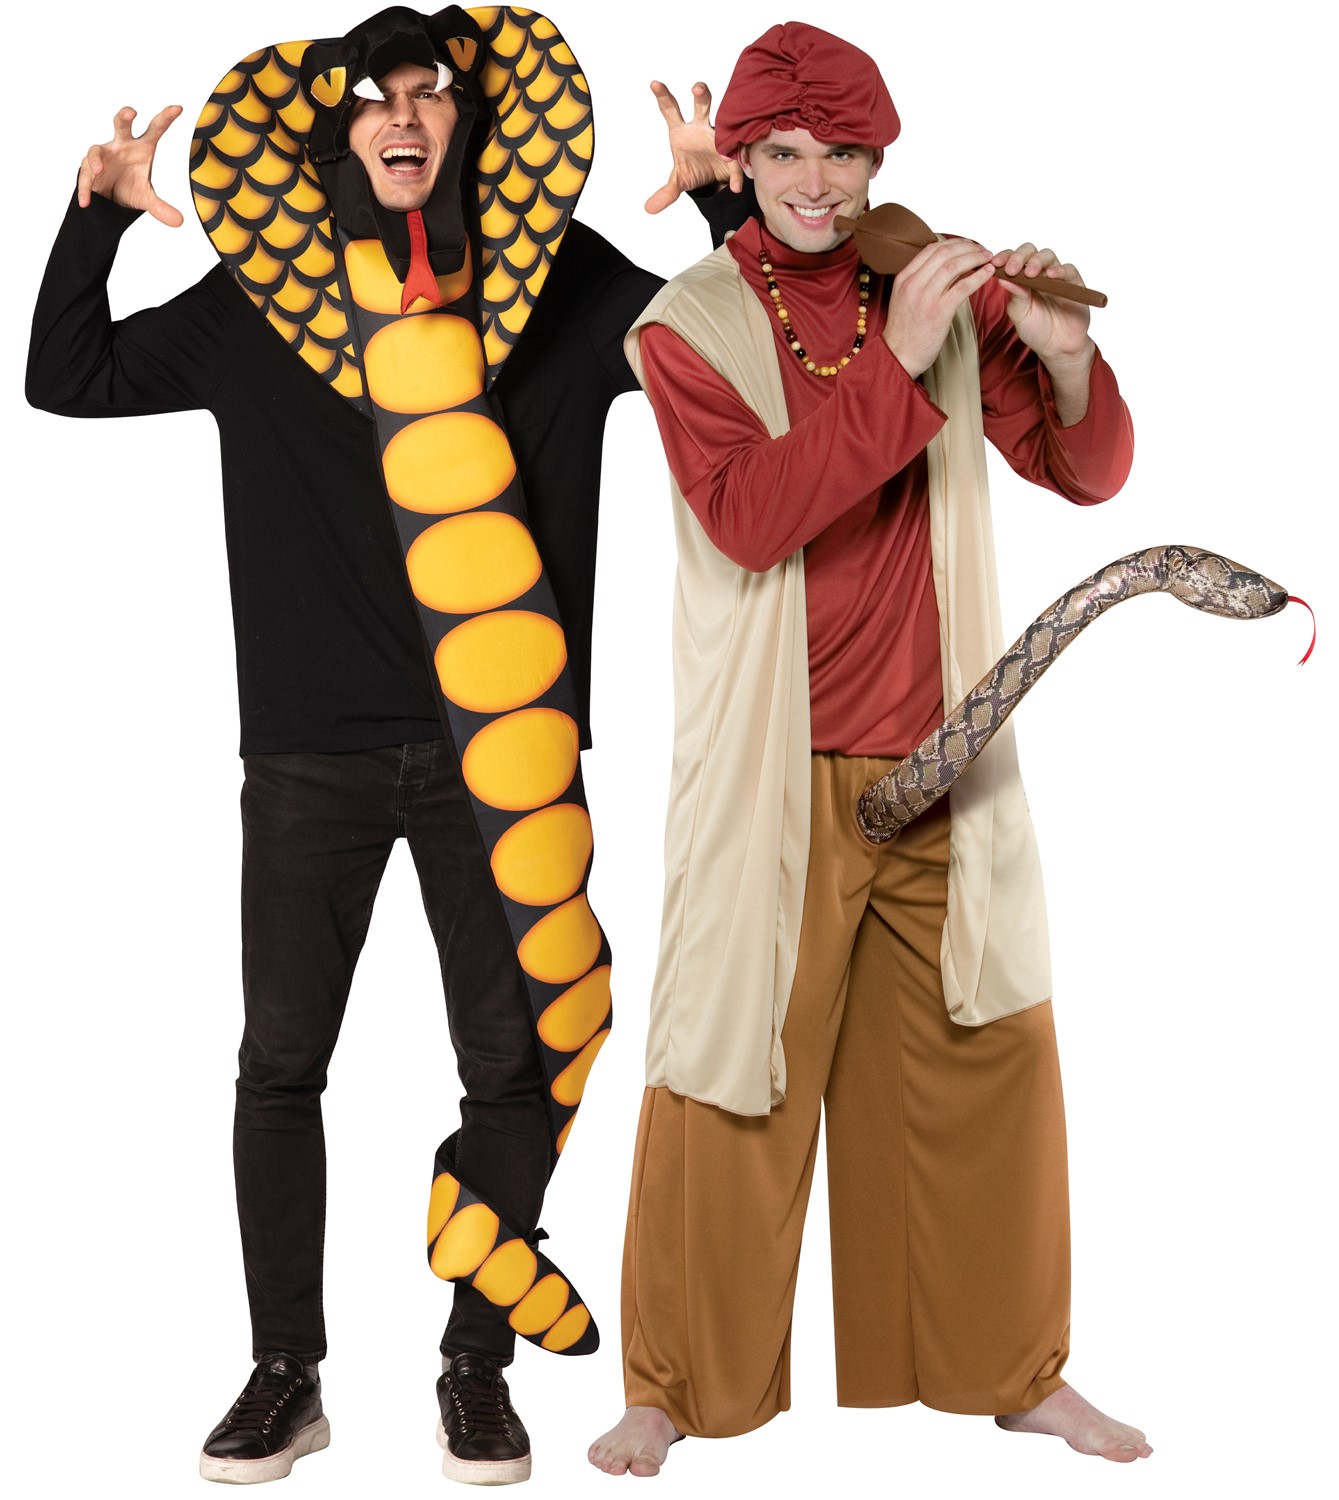 Rasta Imposta Cobra & Snake Charmer Couples Costume, Adult One Size 10316